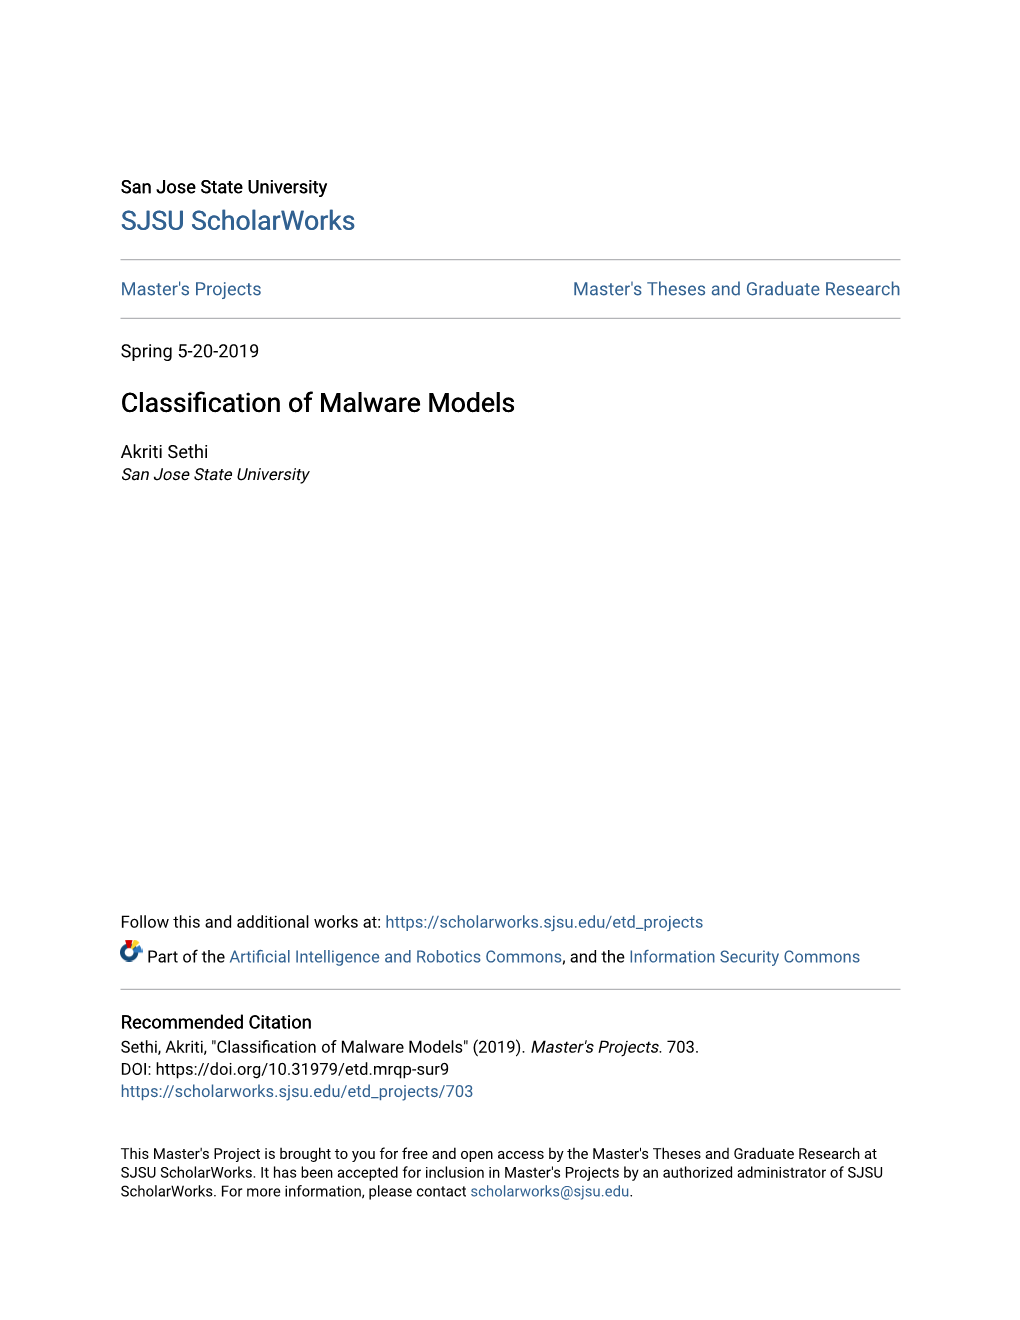 Classification of Malware Models